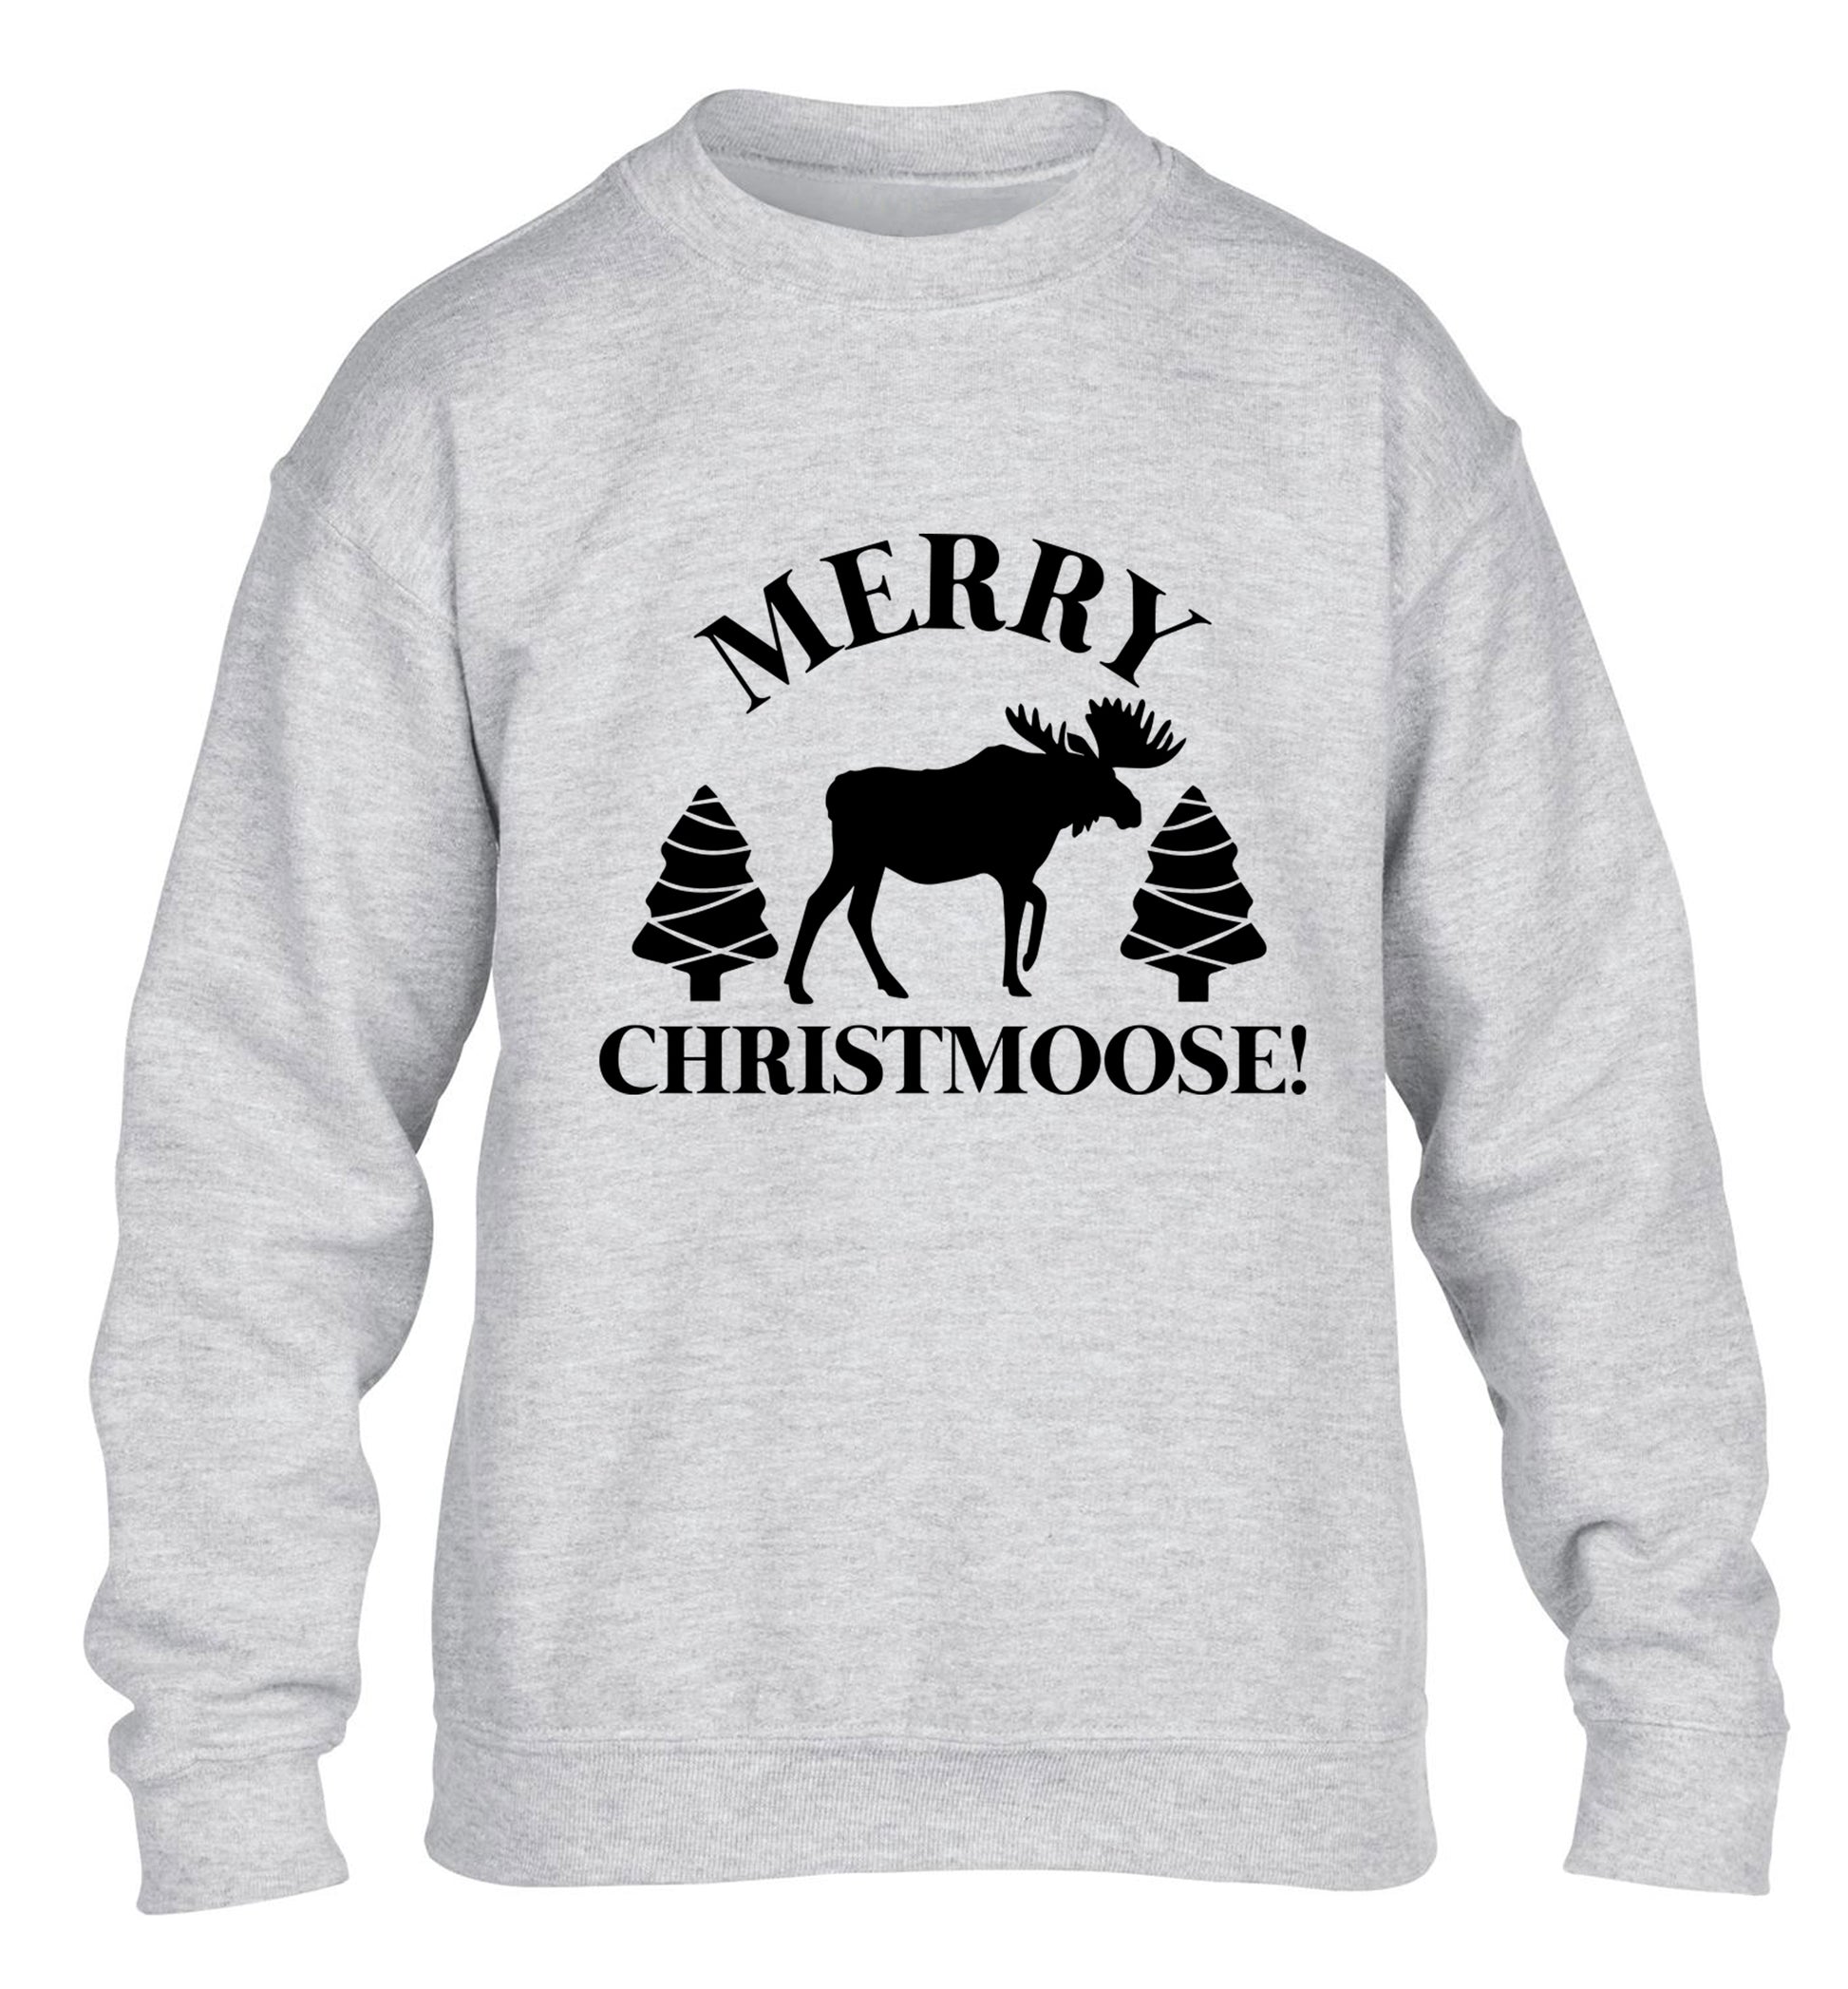 Merry Christmoose children's grey sweater 12-14 Years